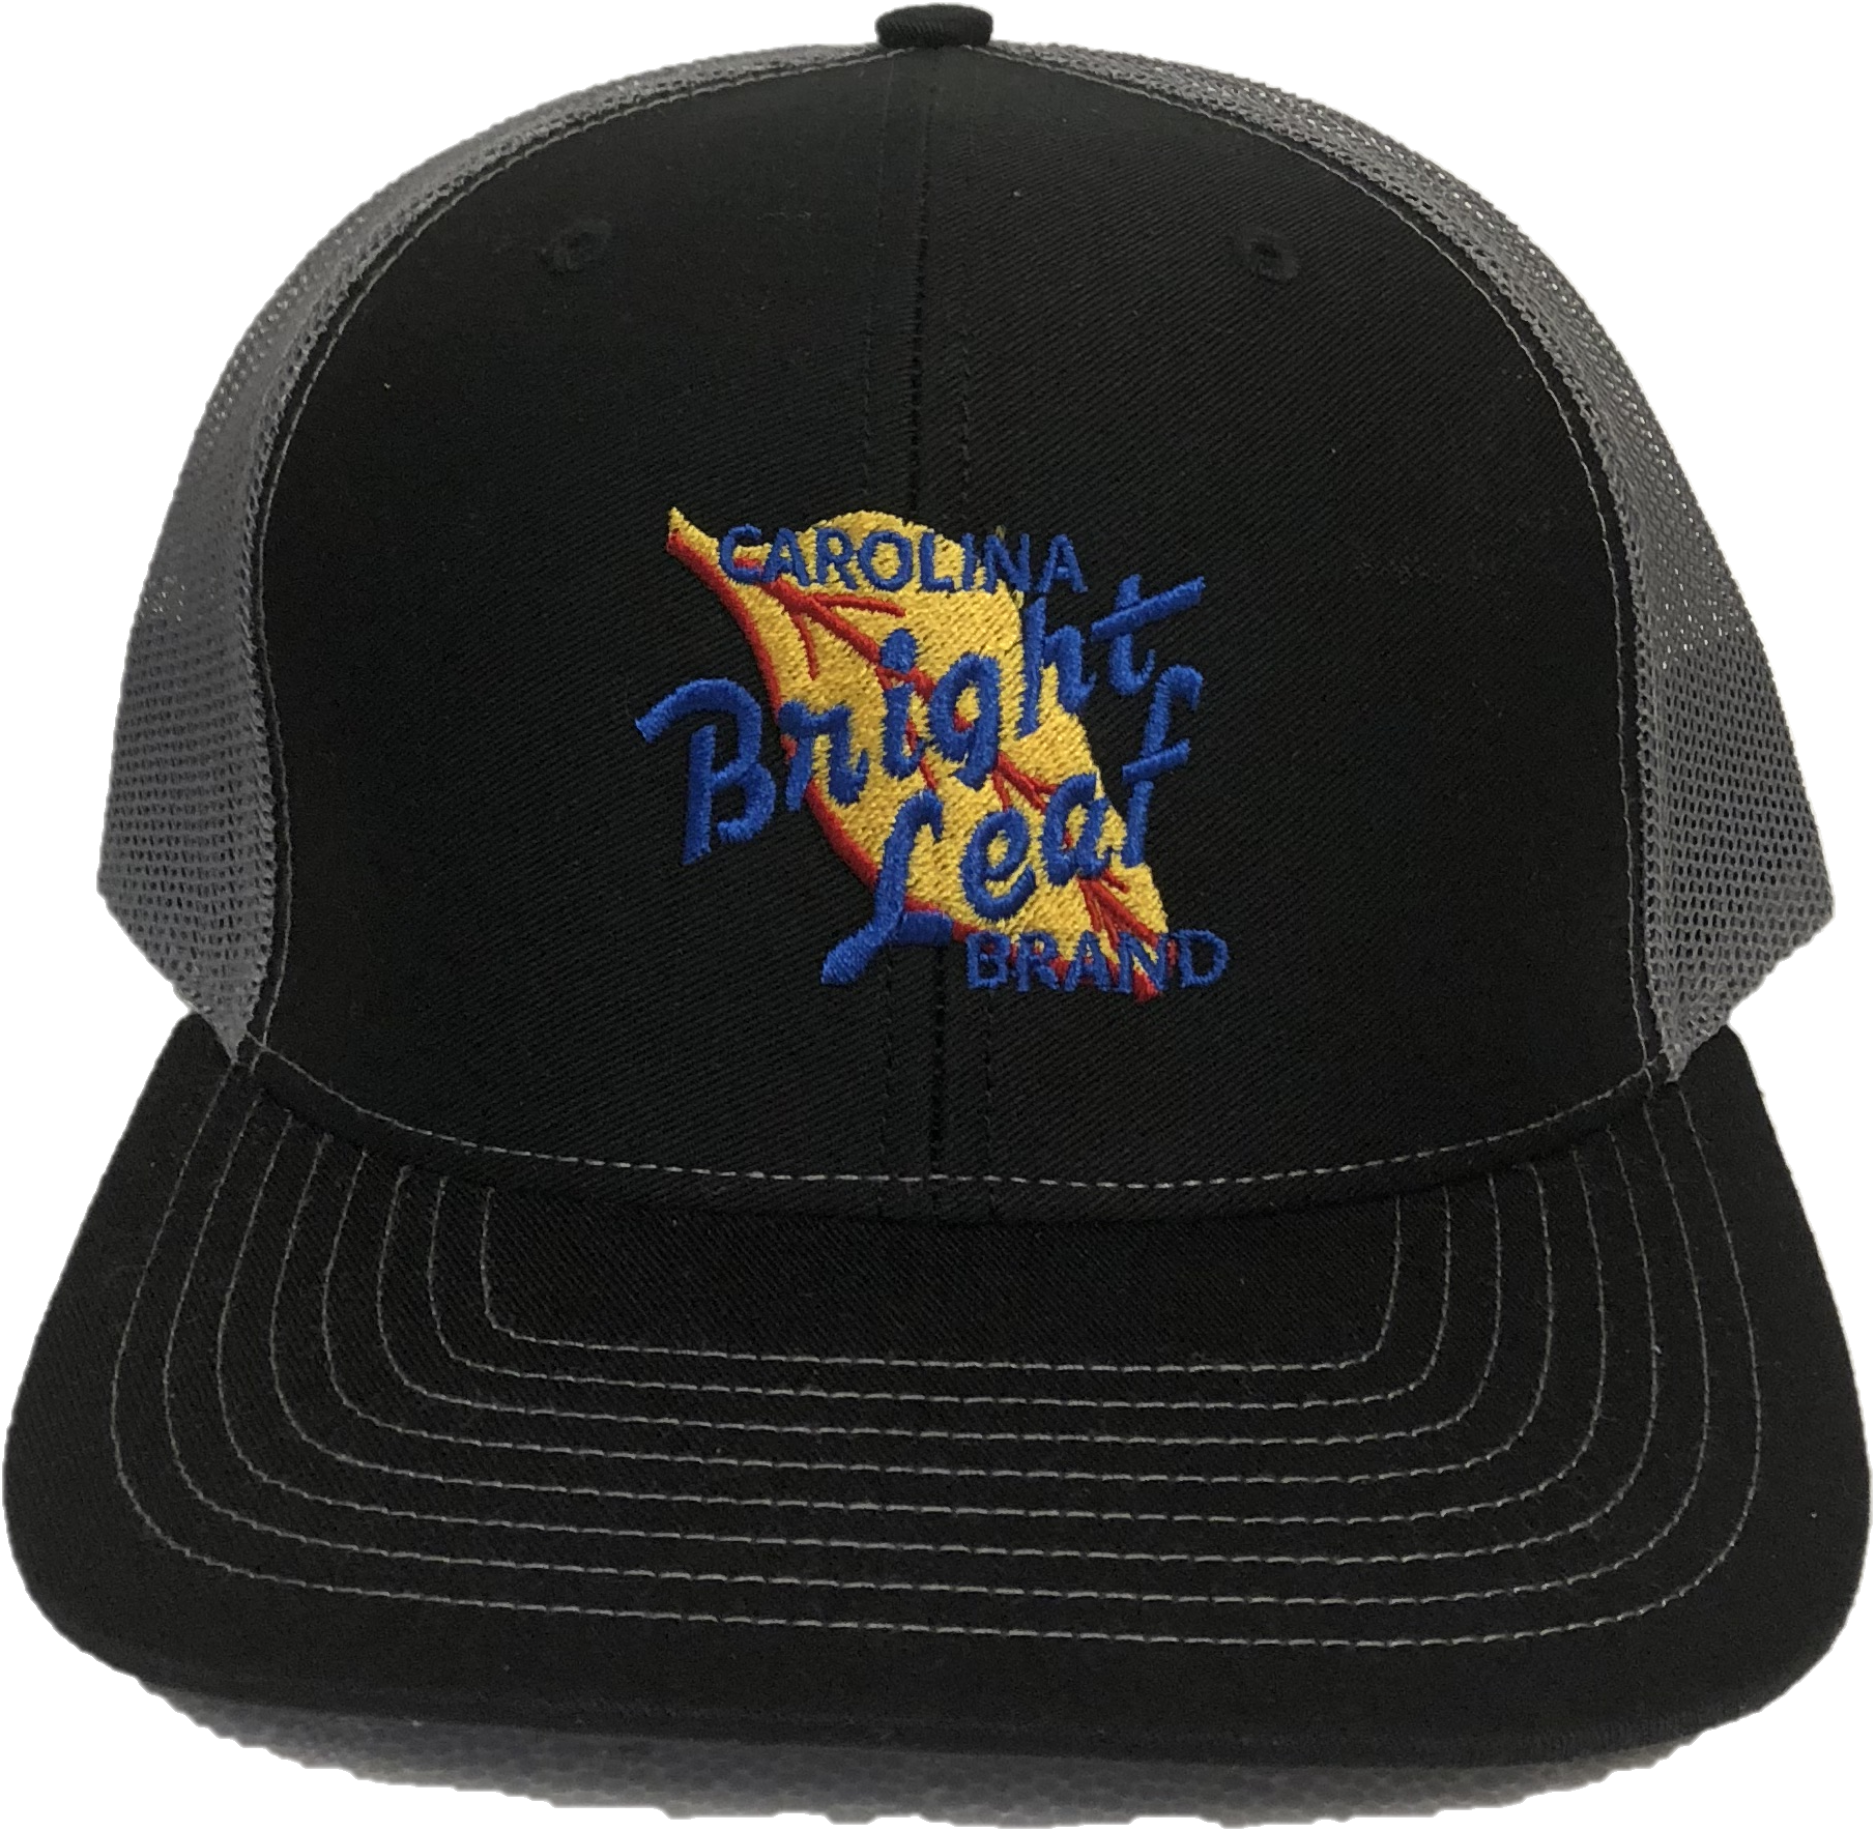 Black / Gray Mesh Snapback Hat